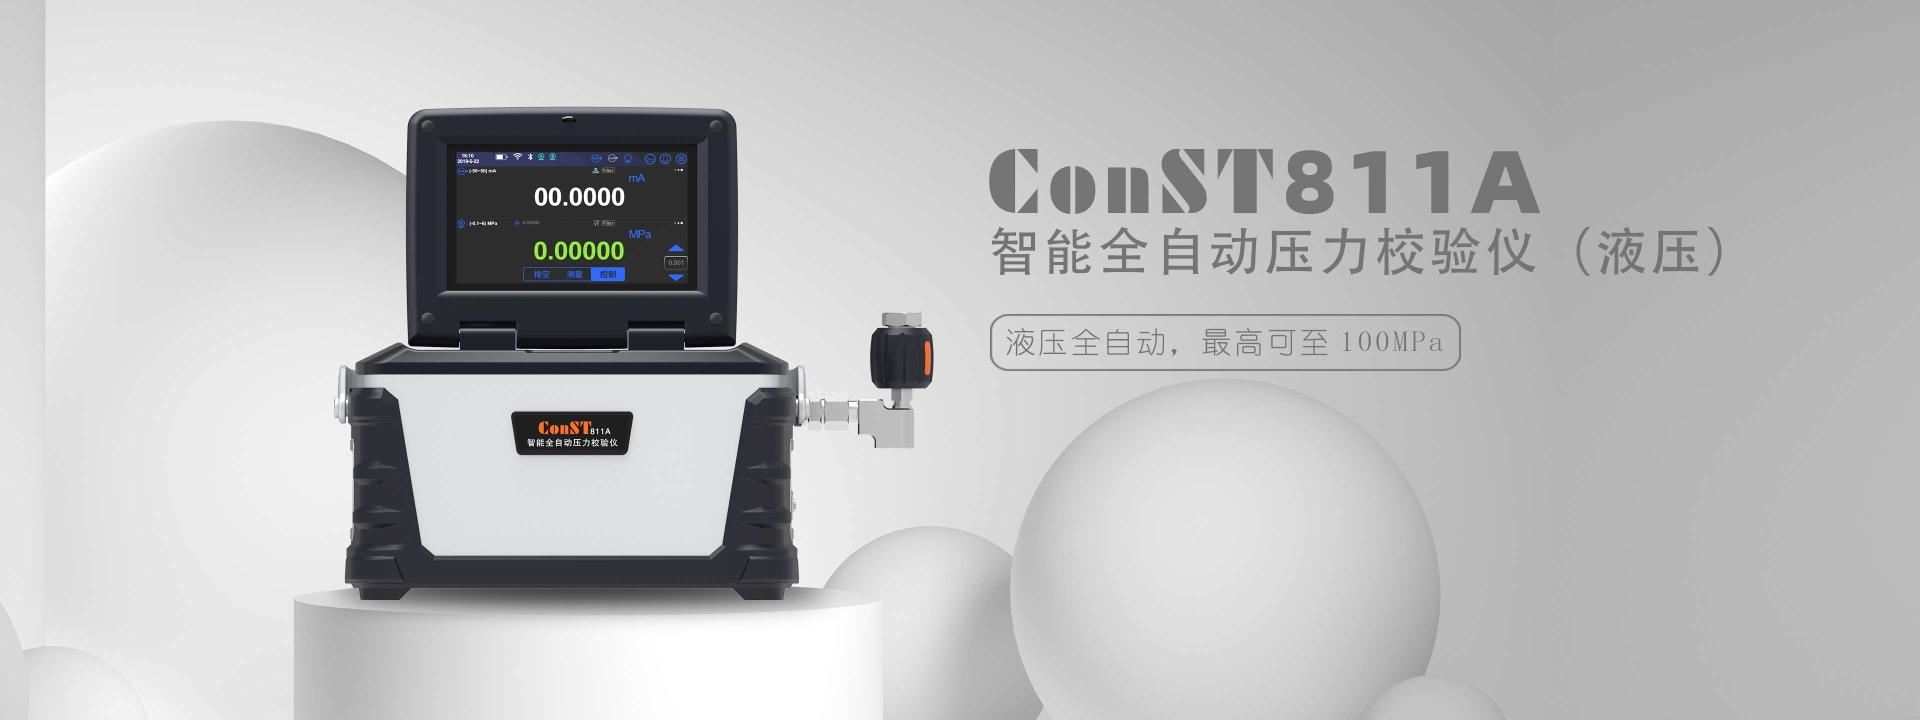 ConST811A智能全自动压力校验仪（液压版）